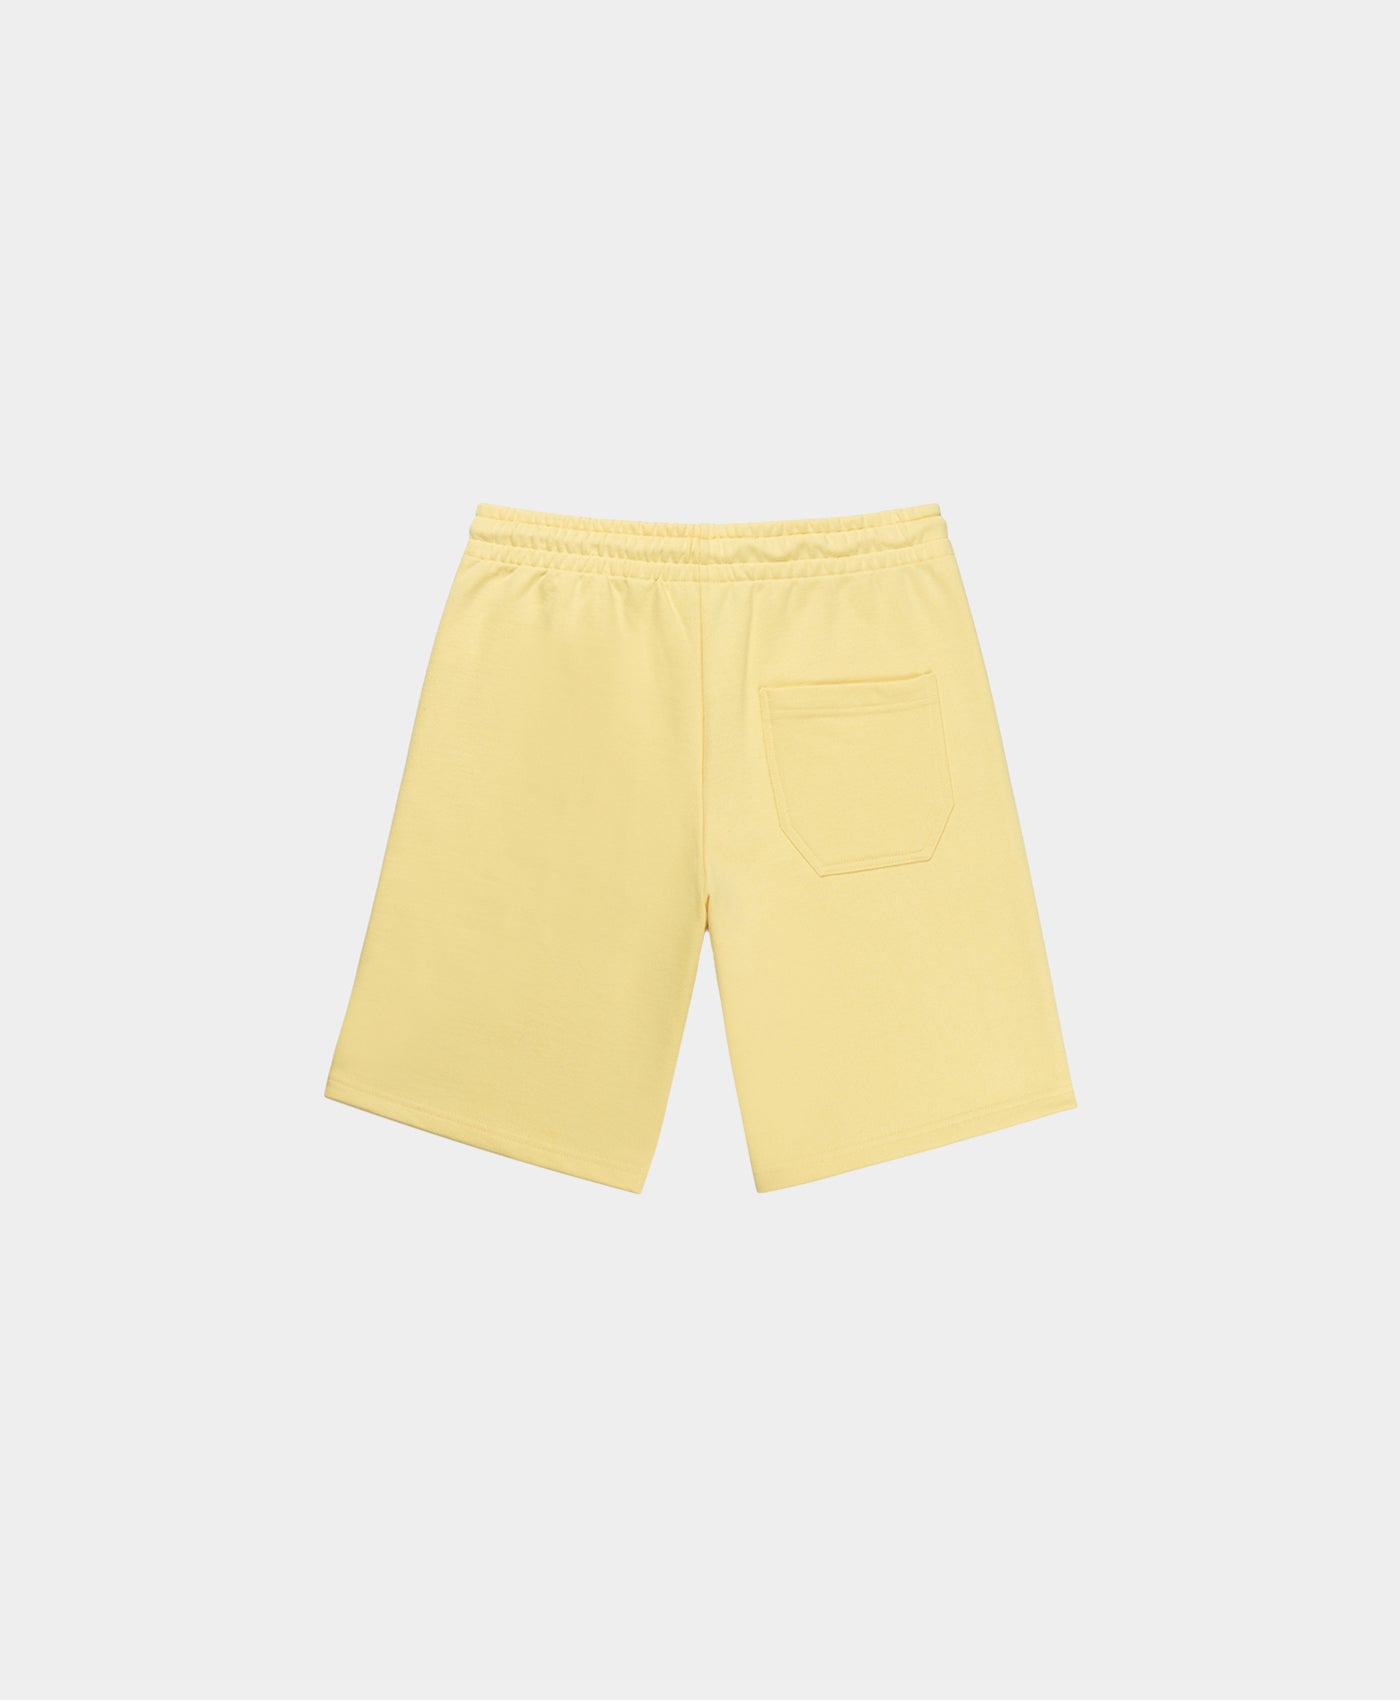 DP - Pineapple Yellow Refarid Shorts - Packshot - Rear